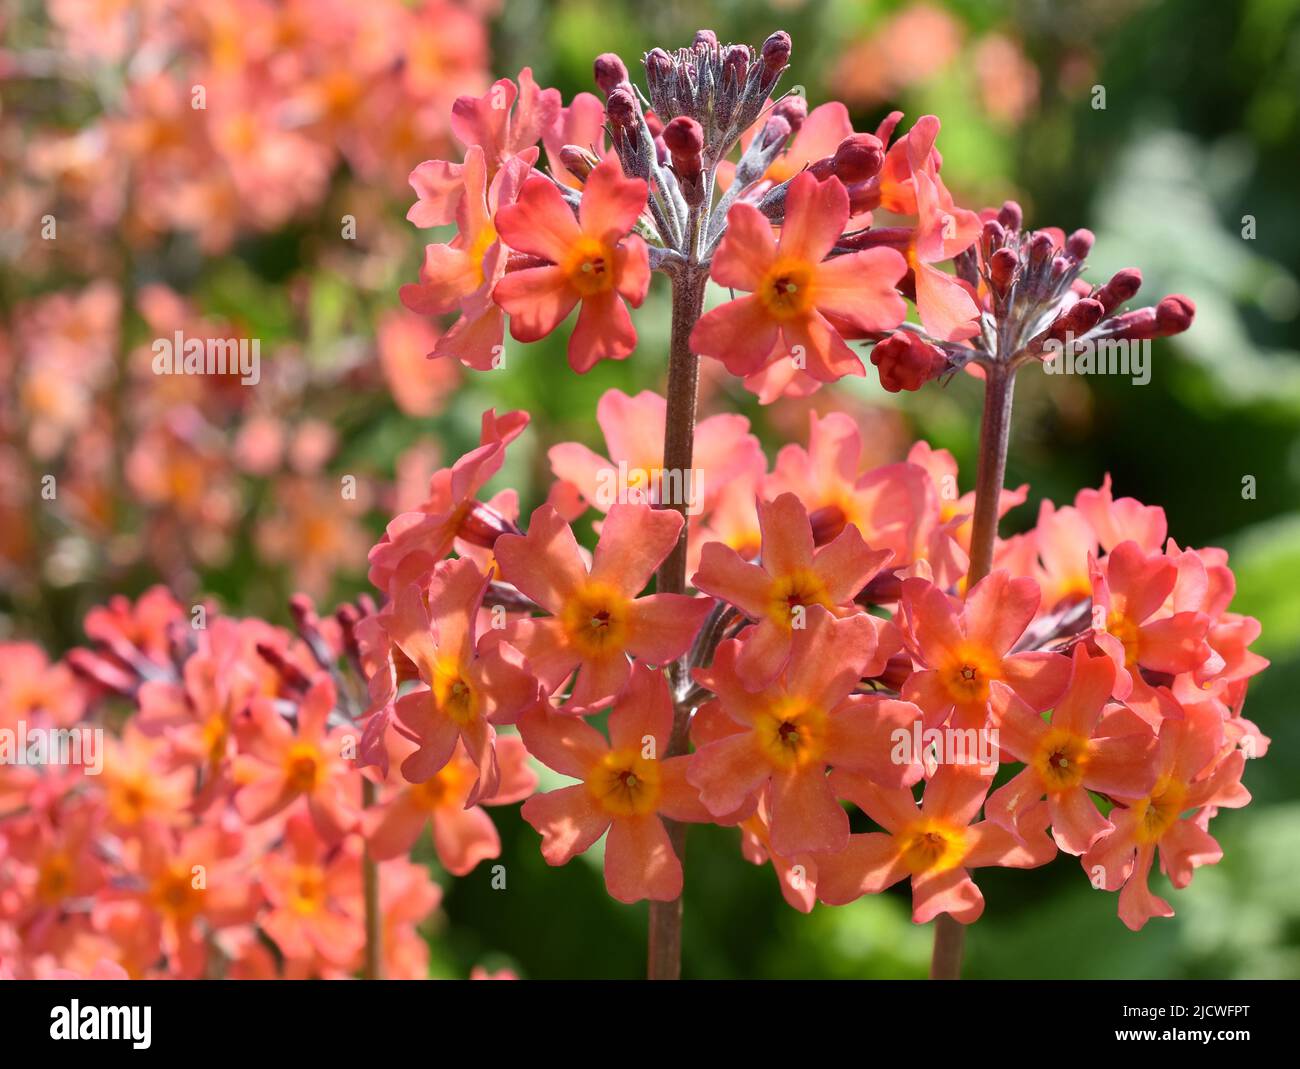 Orange colored flowers on primula candelabra plant Stock Photo